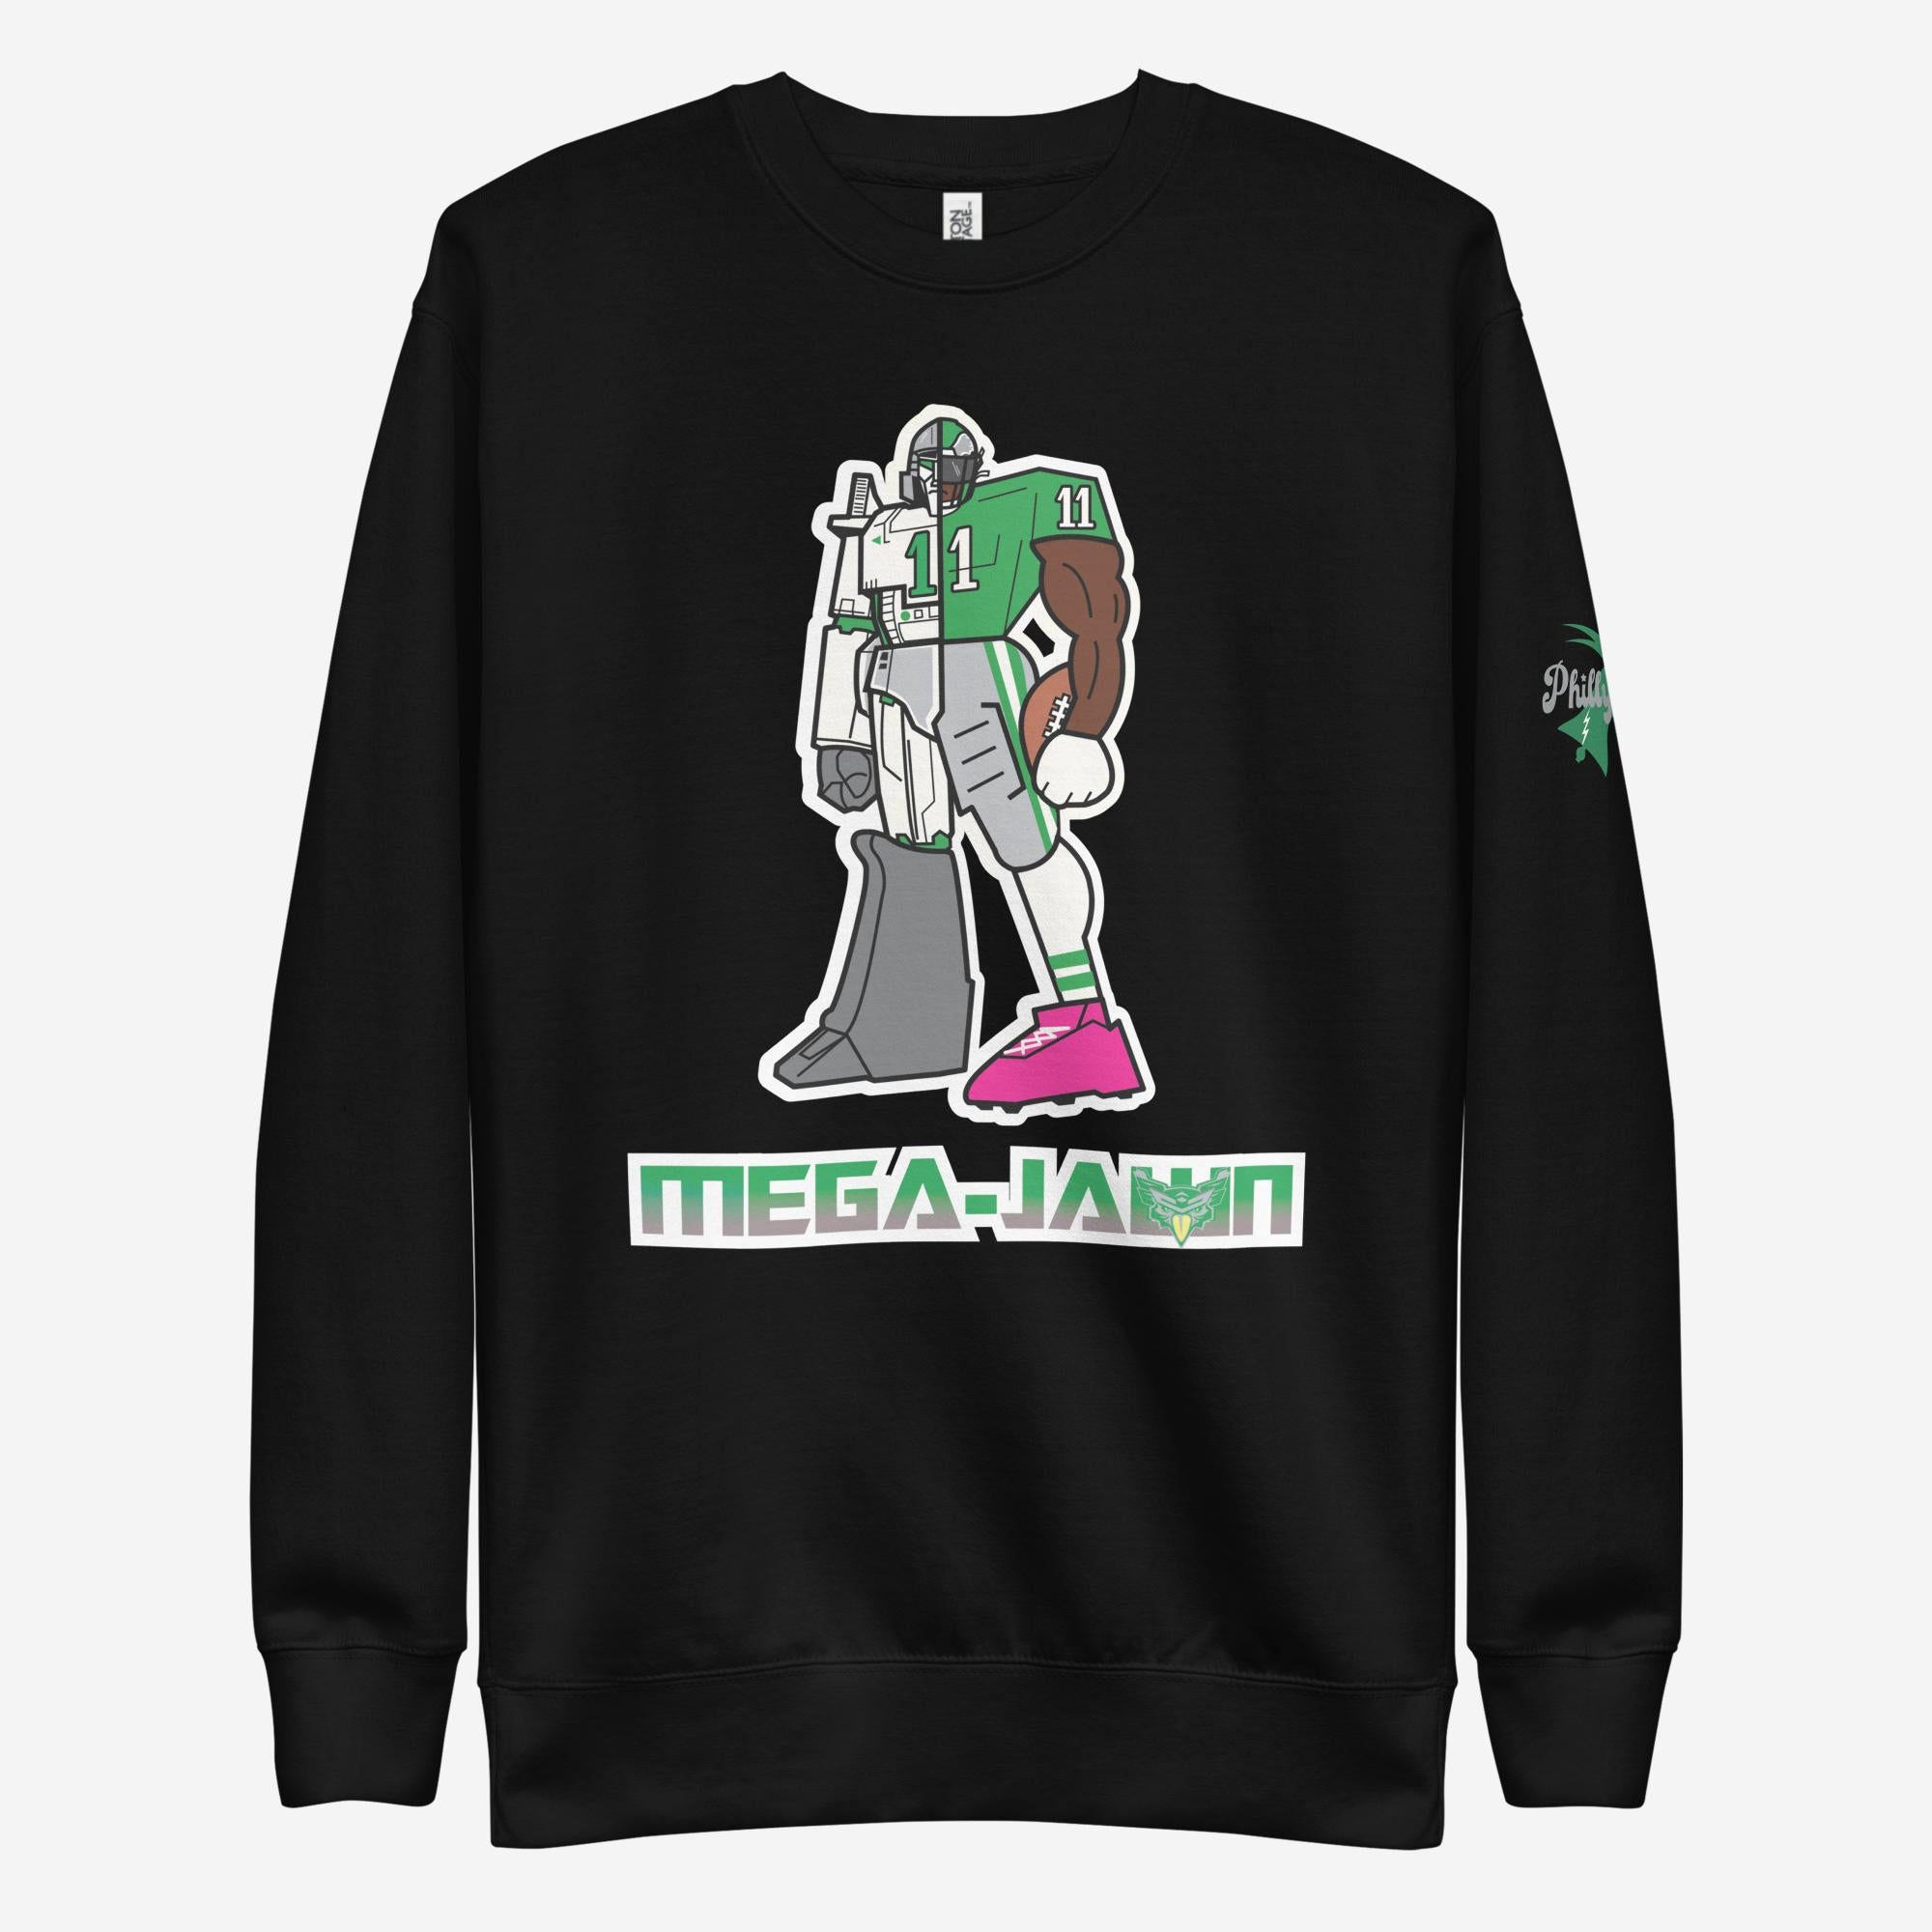 "MEGA-JAWN" Sweatshirt